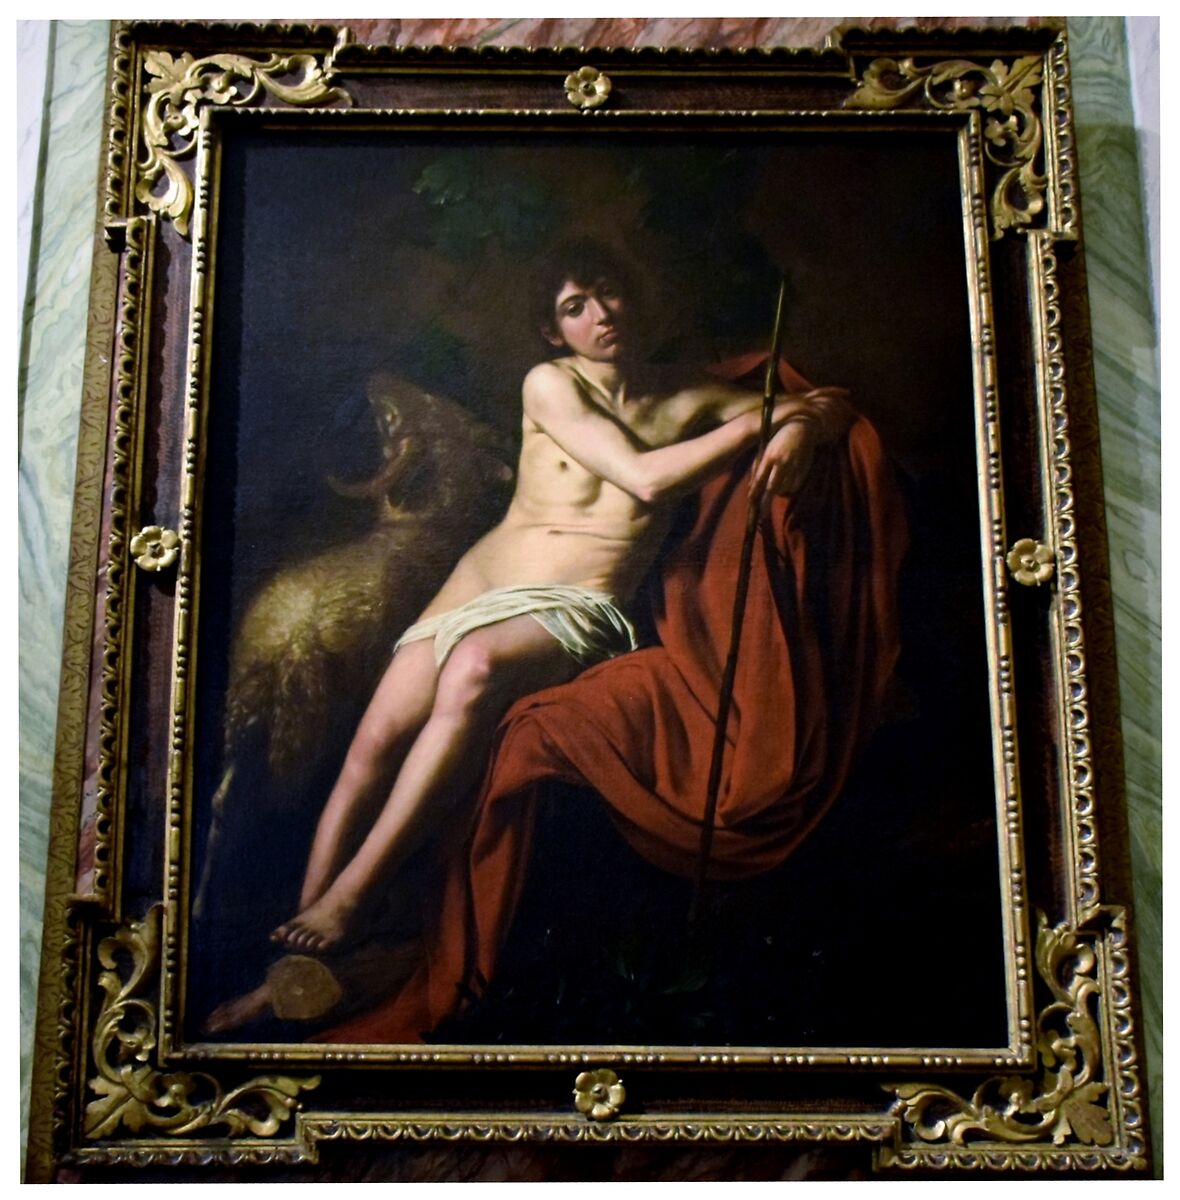 Borghese Gallery - Caravaggio "St. John the Baptist"...